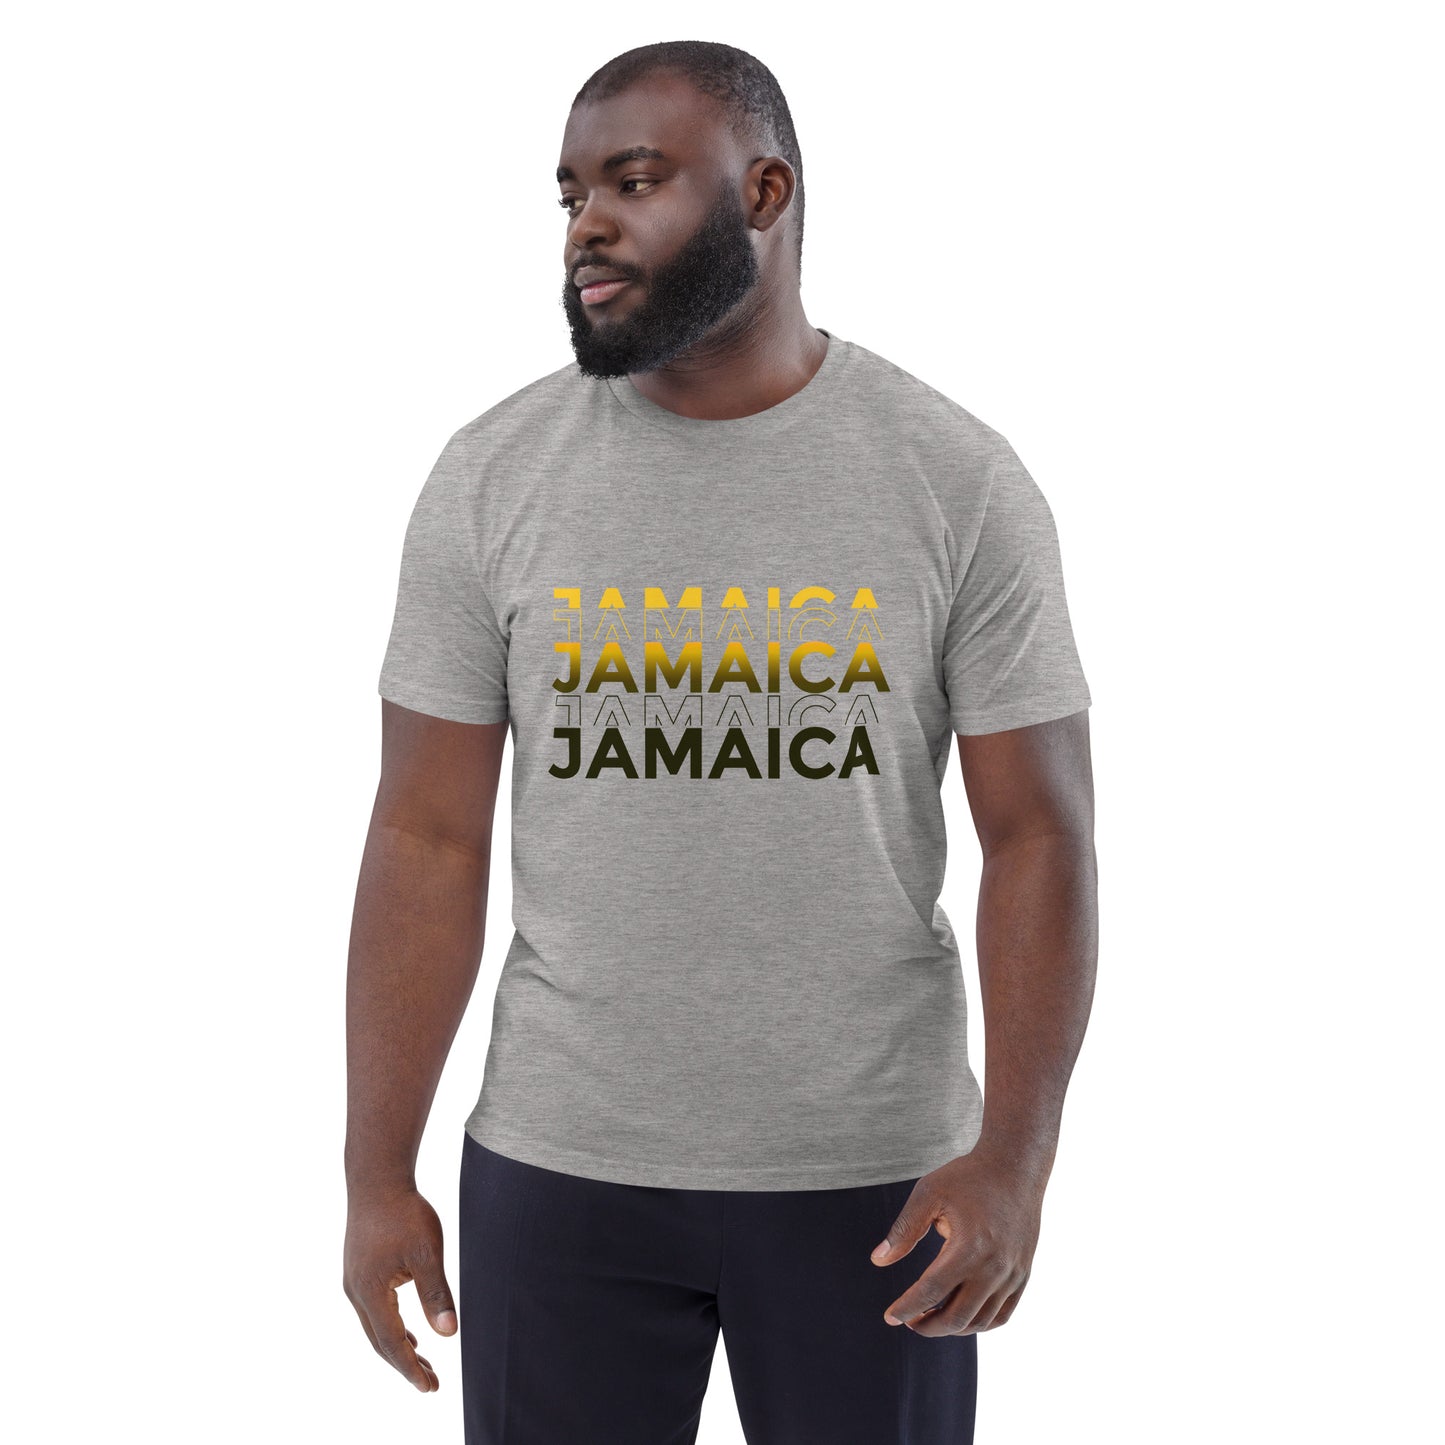 Unisex organic cotton "Jamaica Jamaica" t-shirt